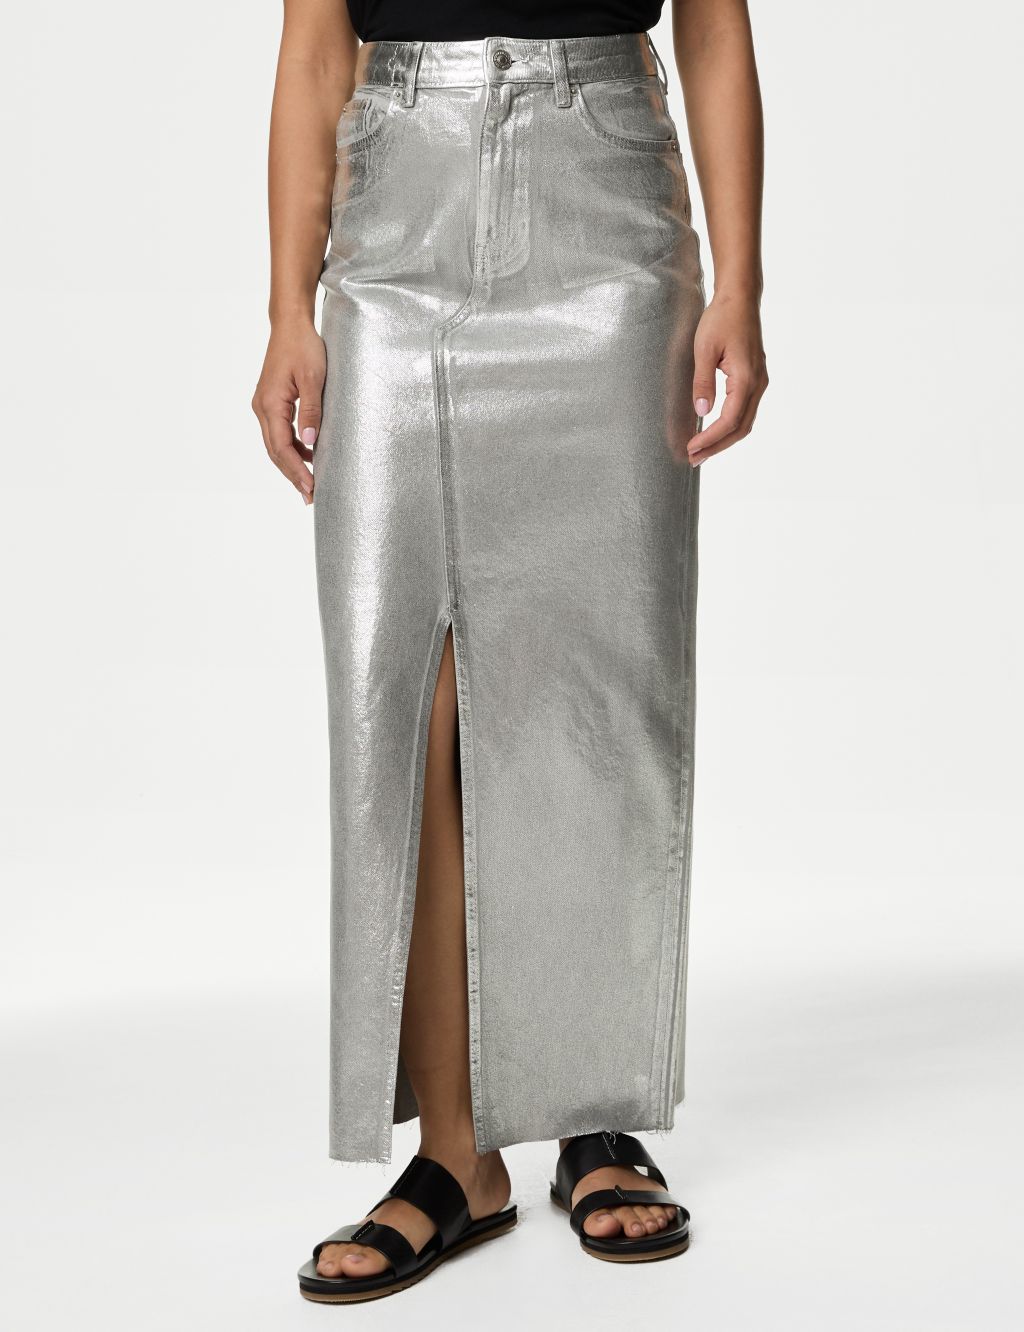 Denim Foil Metallic Maxi Skirt 7 of 7